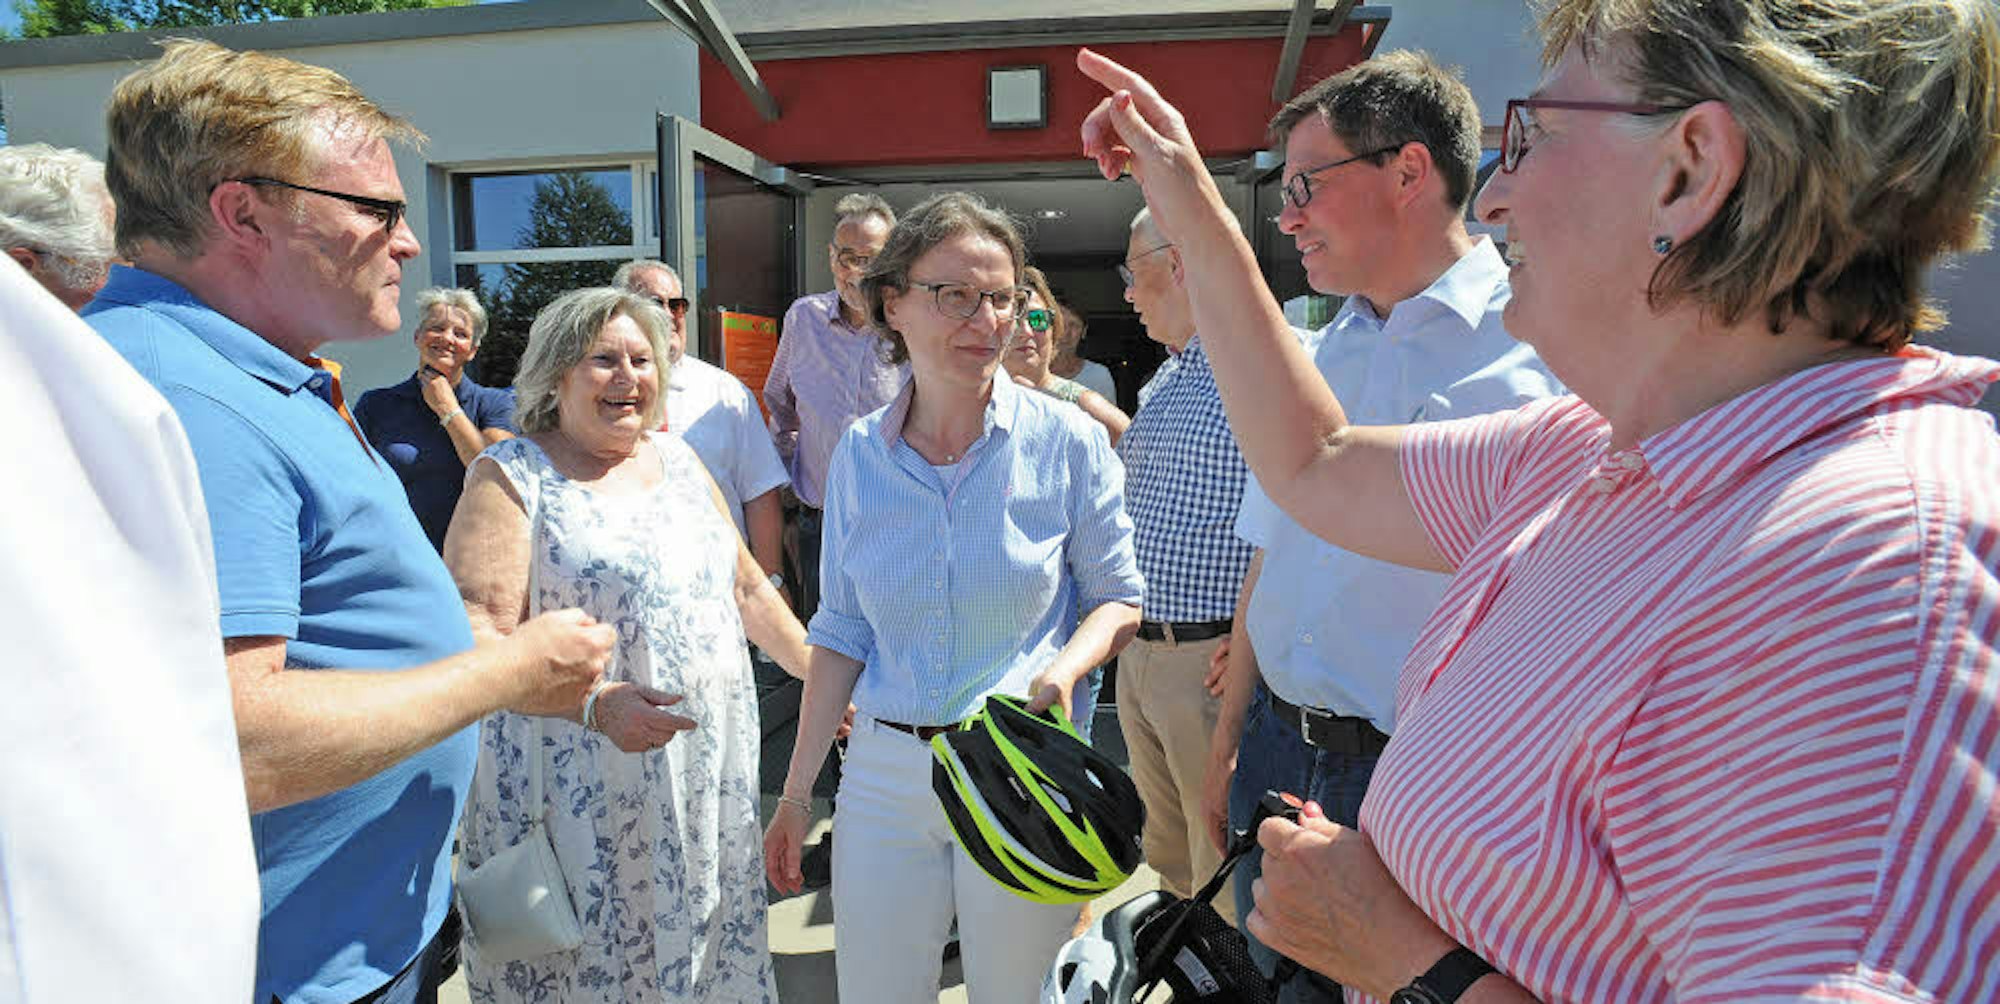 NRW-Ministerin Ina Scharrenbach (Mitte) und Bürgermeister Stefan Caplan (l.) bei der Ankunft am Jugendzentrum Megafon, wo Landrat Stefan Santelmann (2.v.r.) die „Heimat-Tour“ begrüßte.